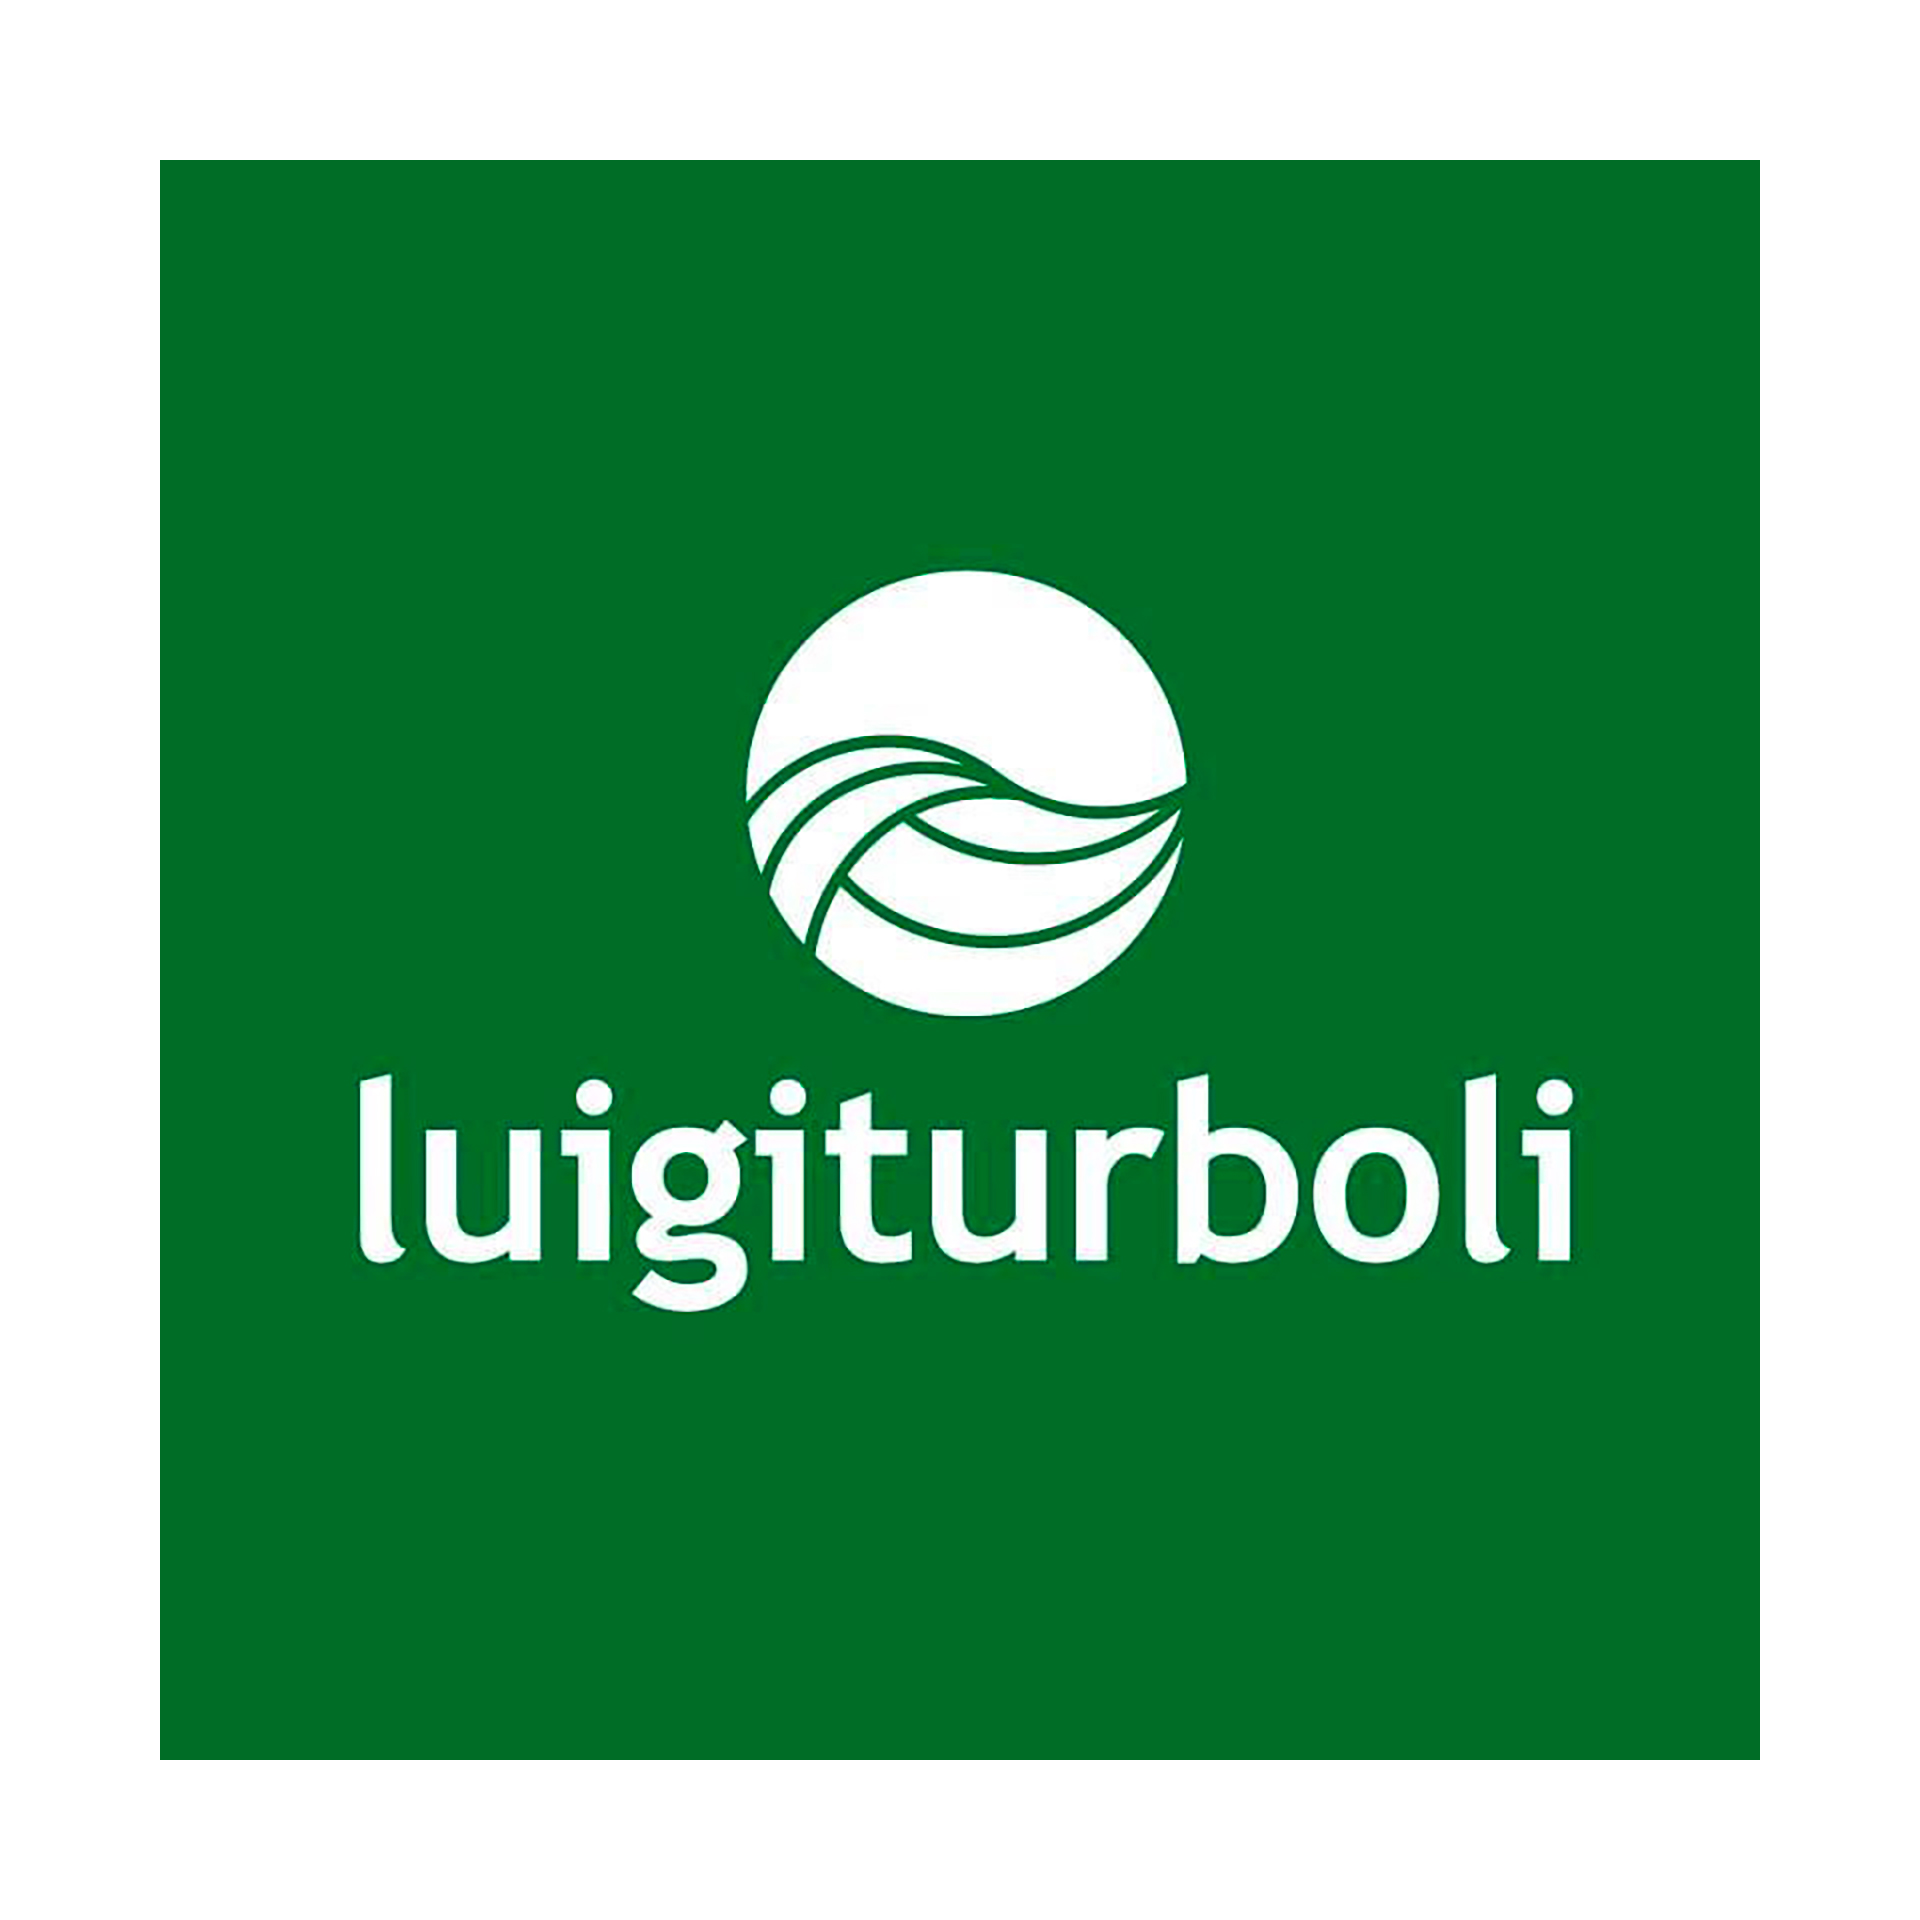 Luigi Turboli